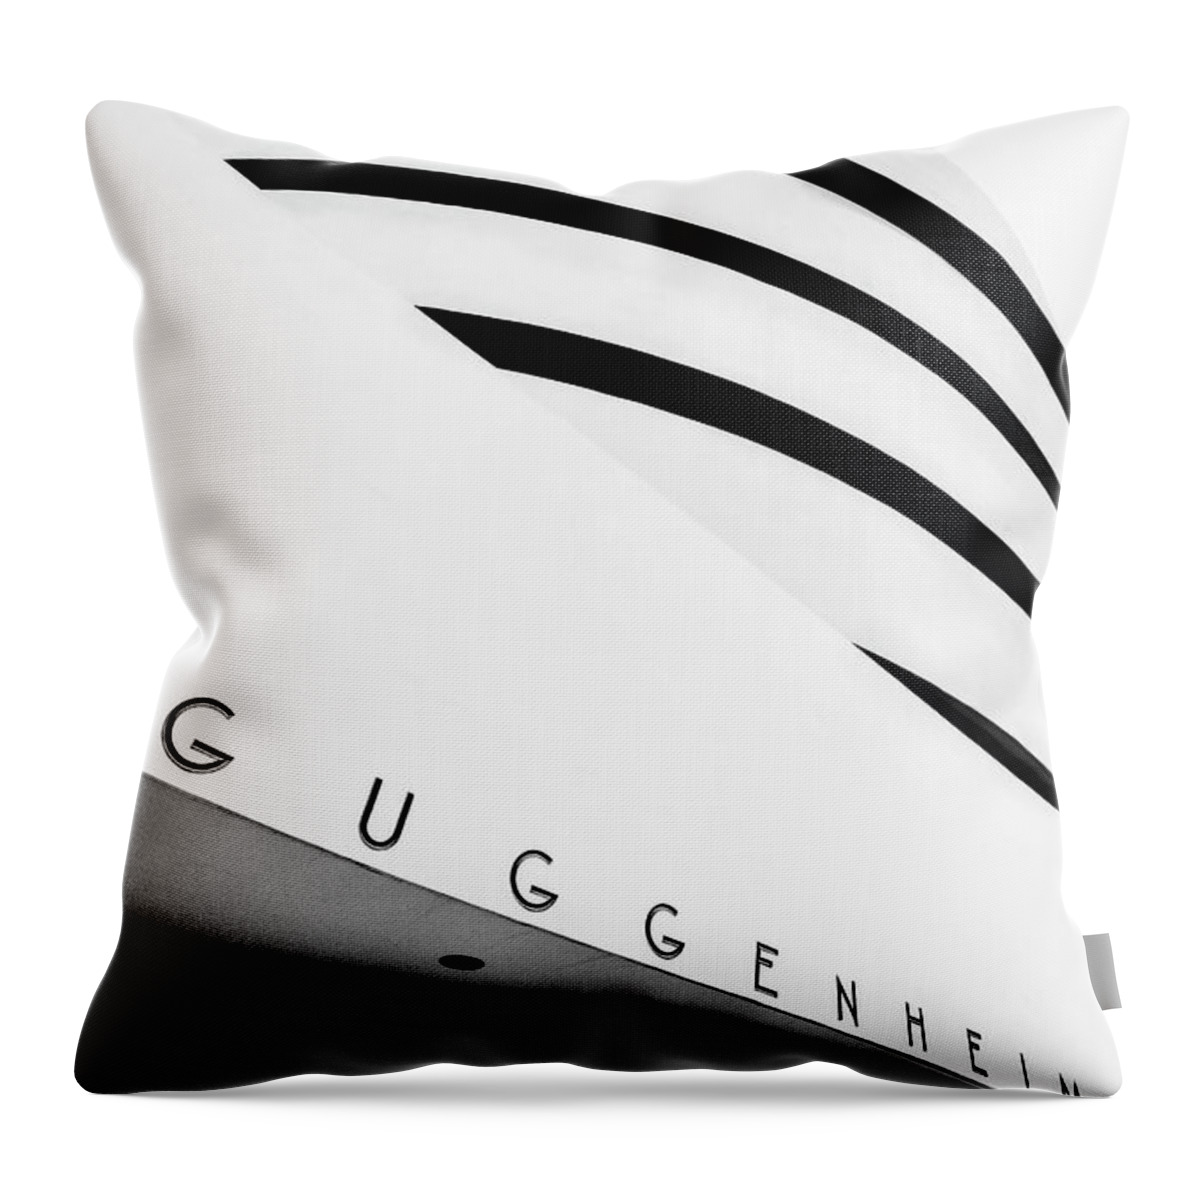 Estock Throw Pillow featuring the digital art Guggenheim Museum, Nyc #1 by Pietro Canali